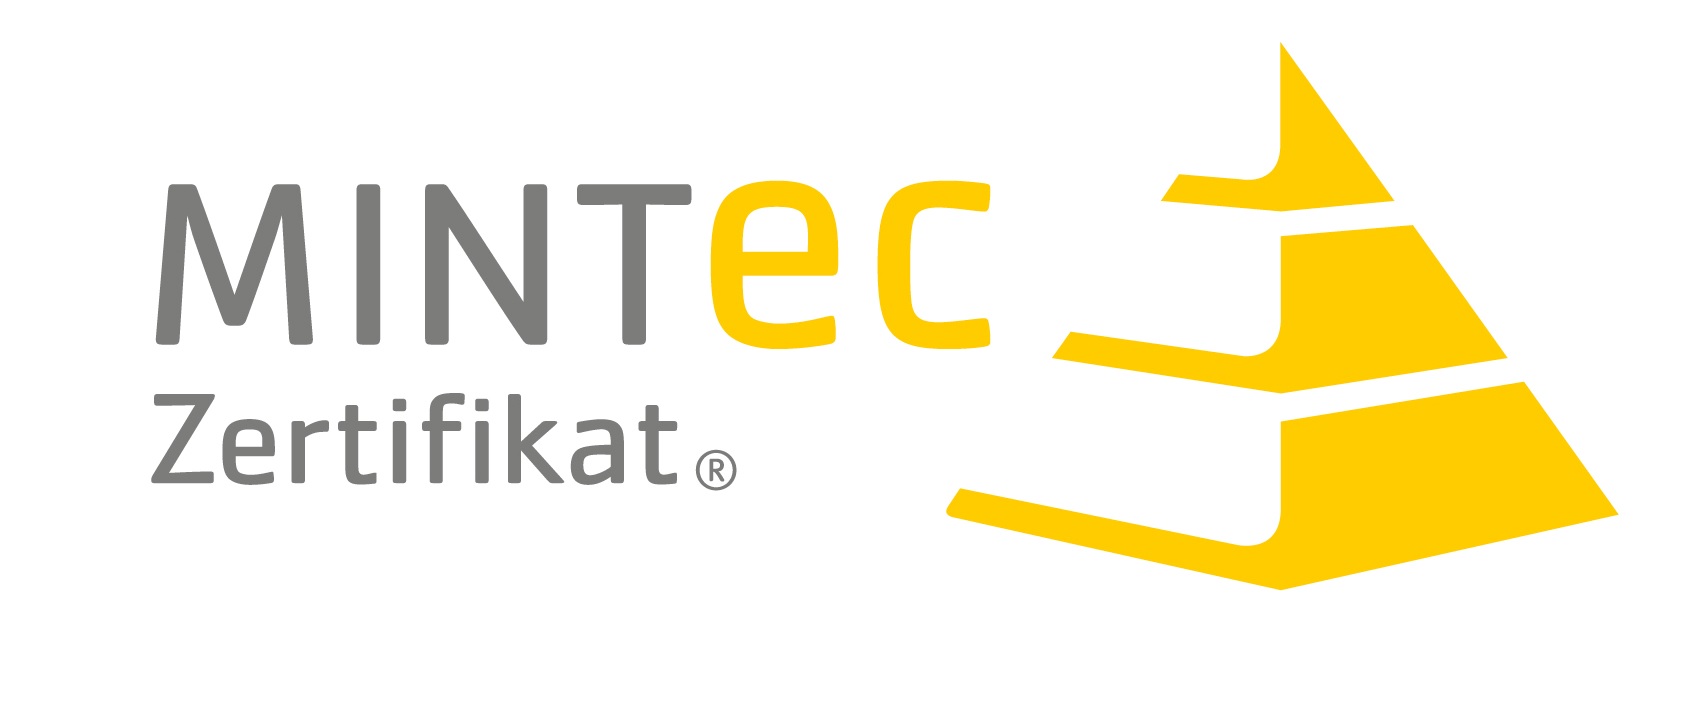 MINT-EC Zertifikat Logo